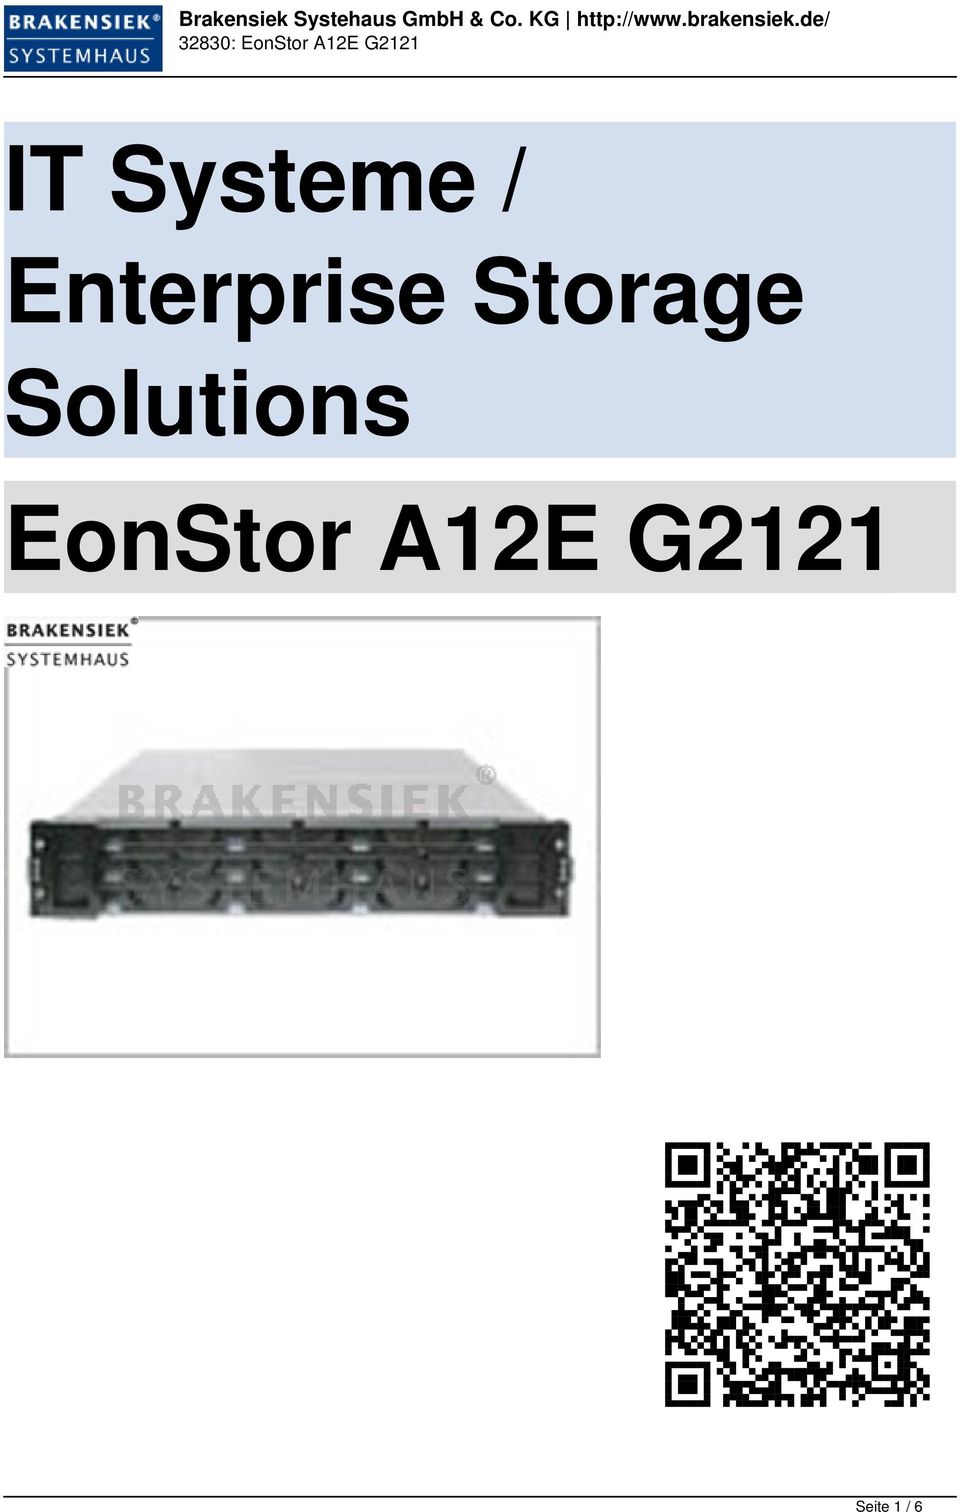 Storage Solutions